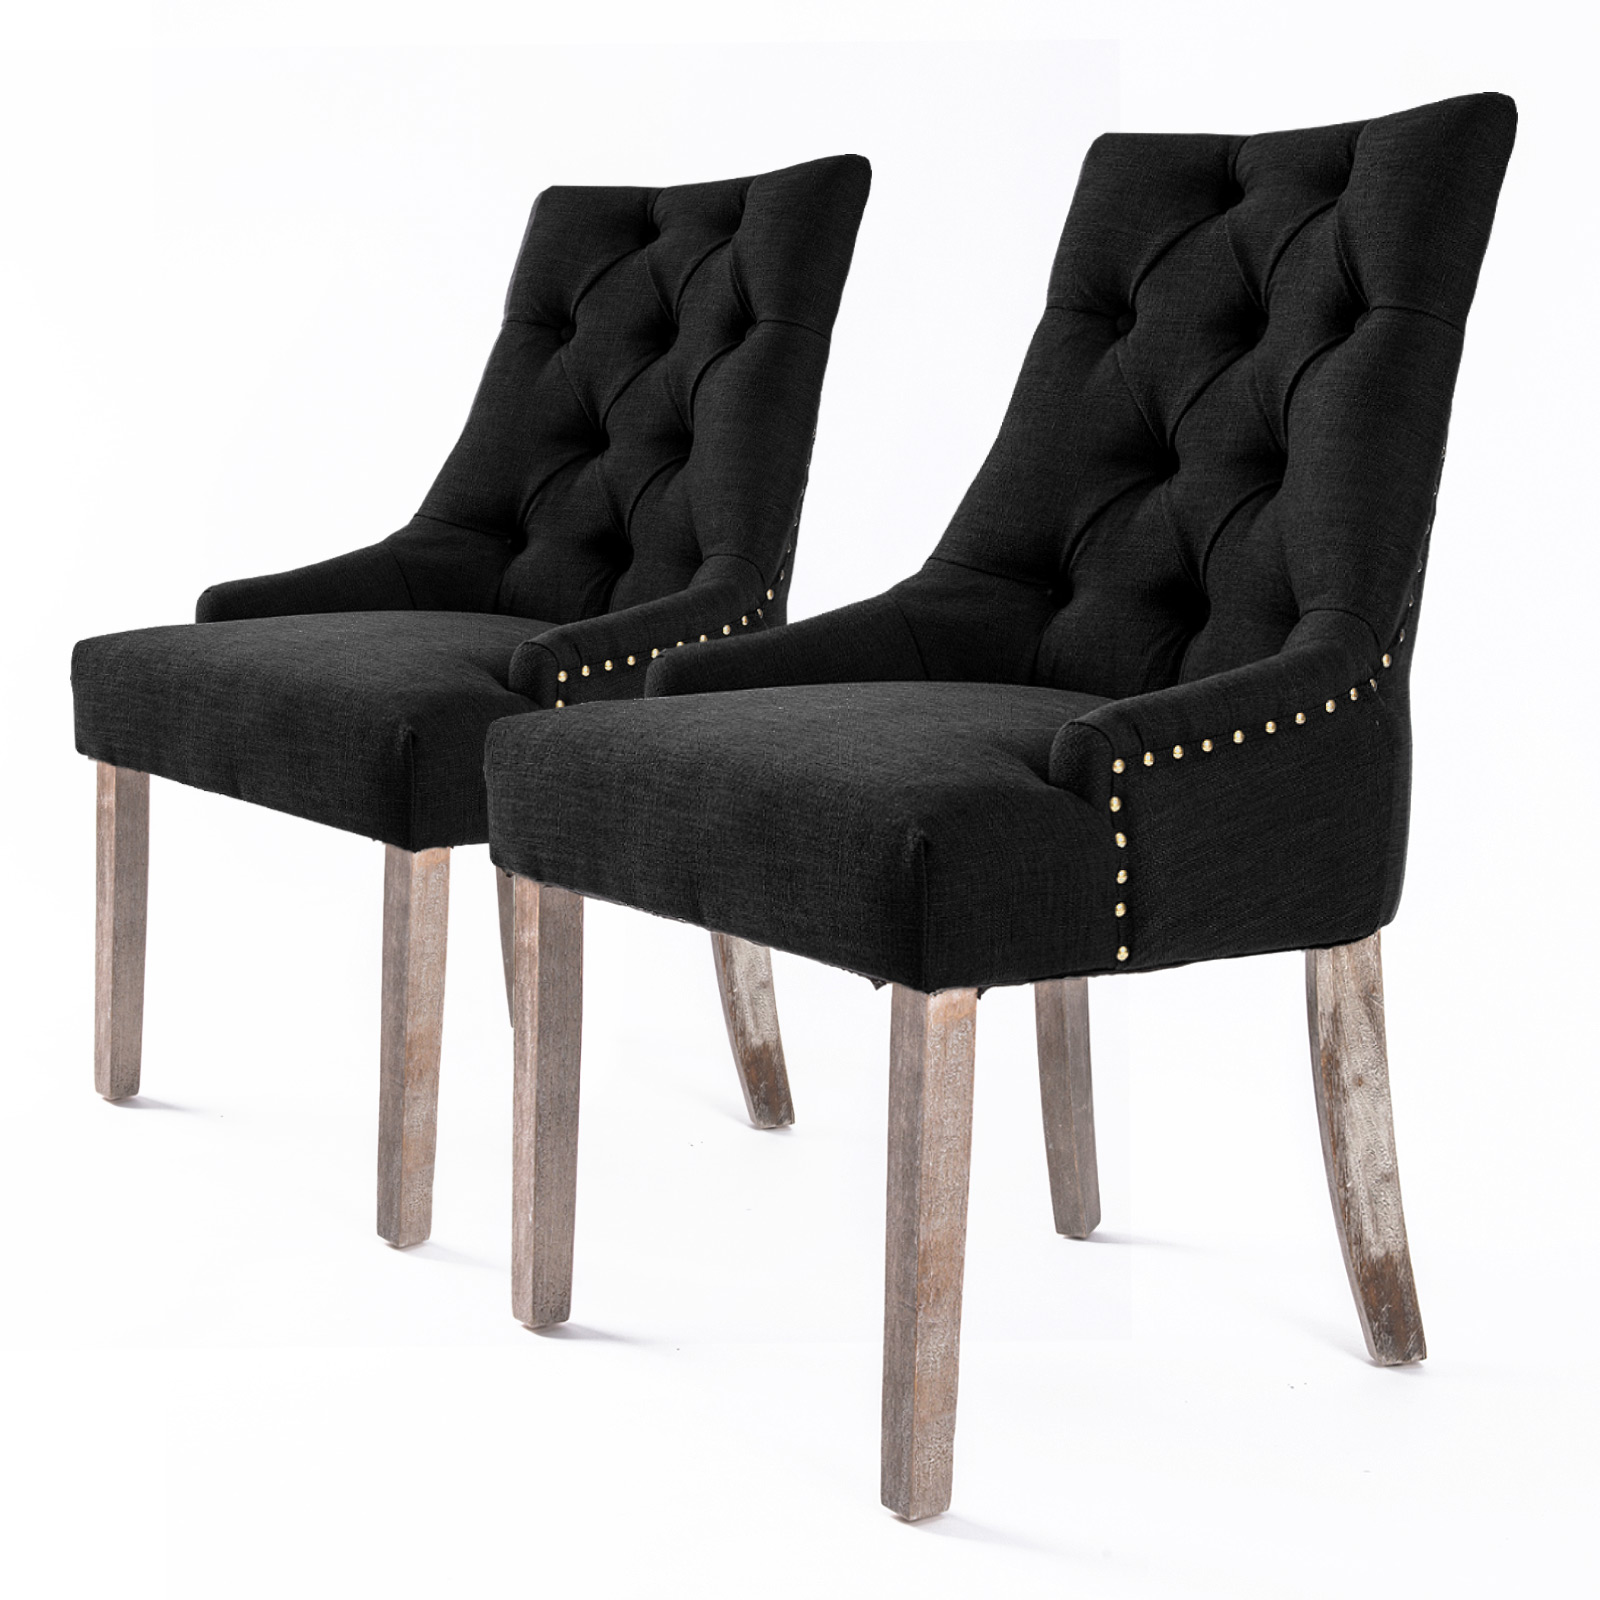 2X French Provincial Oak Leg Chair AMOUR - DARK BLACK